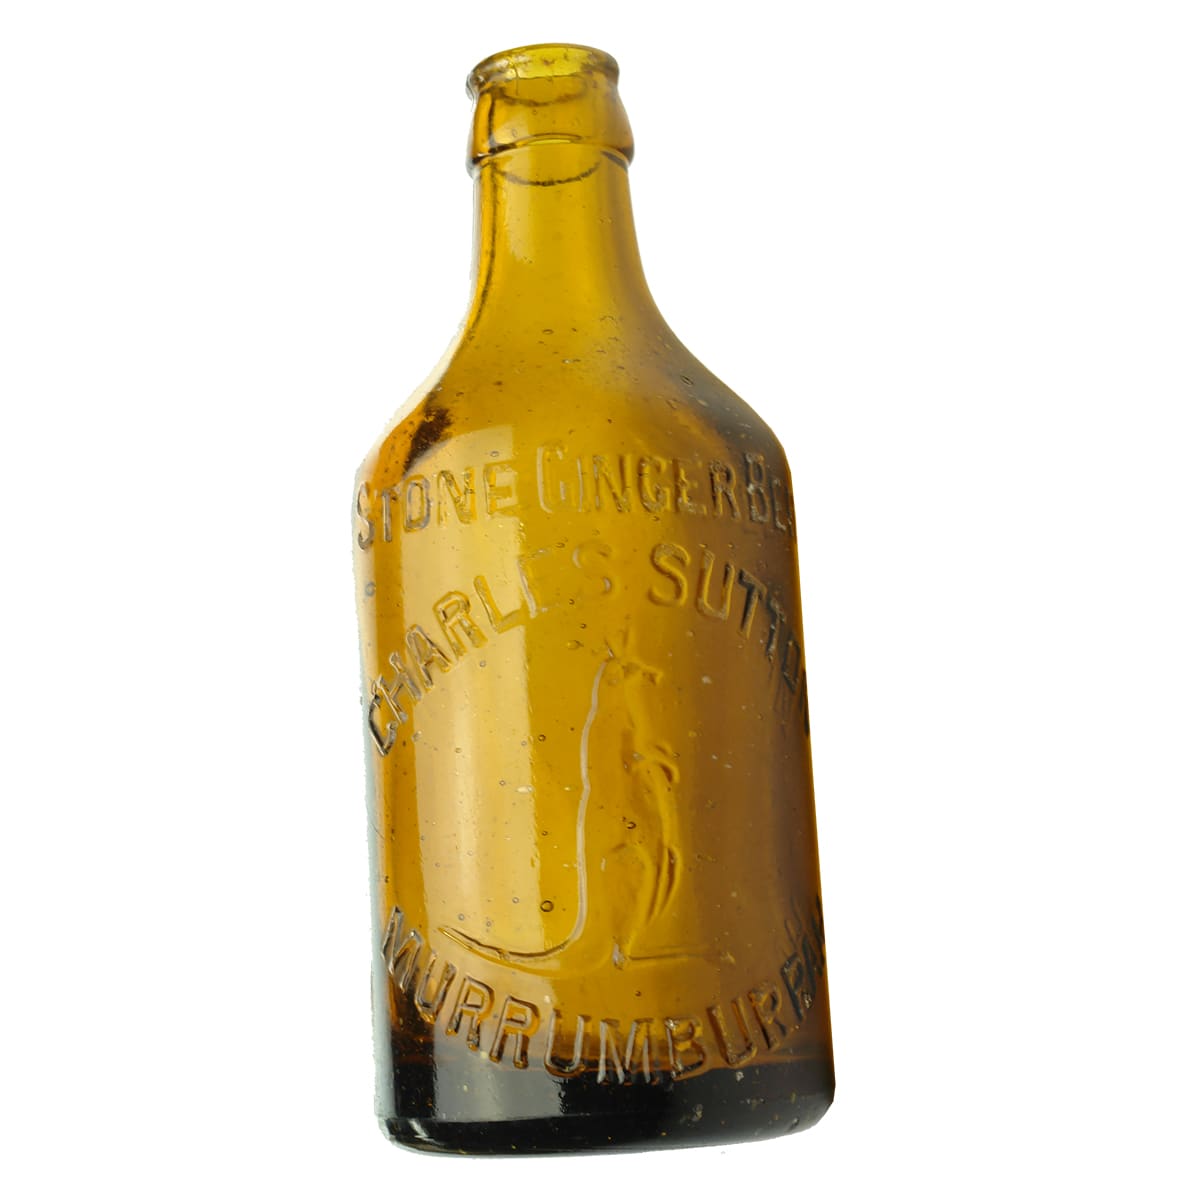 Ginger Beer. Charles Sutton, Murrumburrah. Lighter Amber. Dump. (New South Wales)